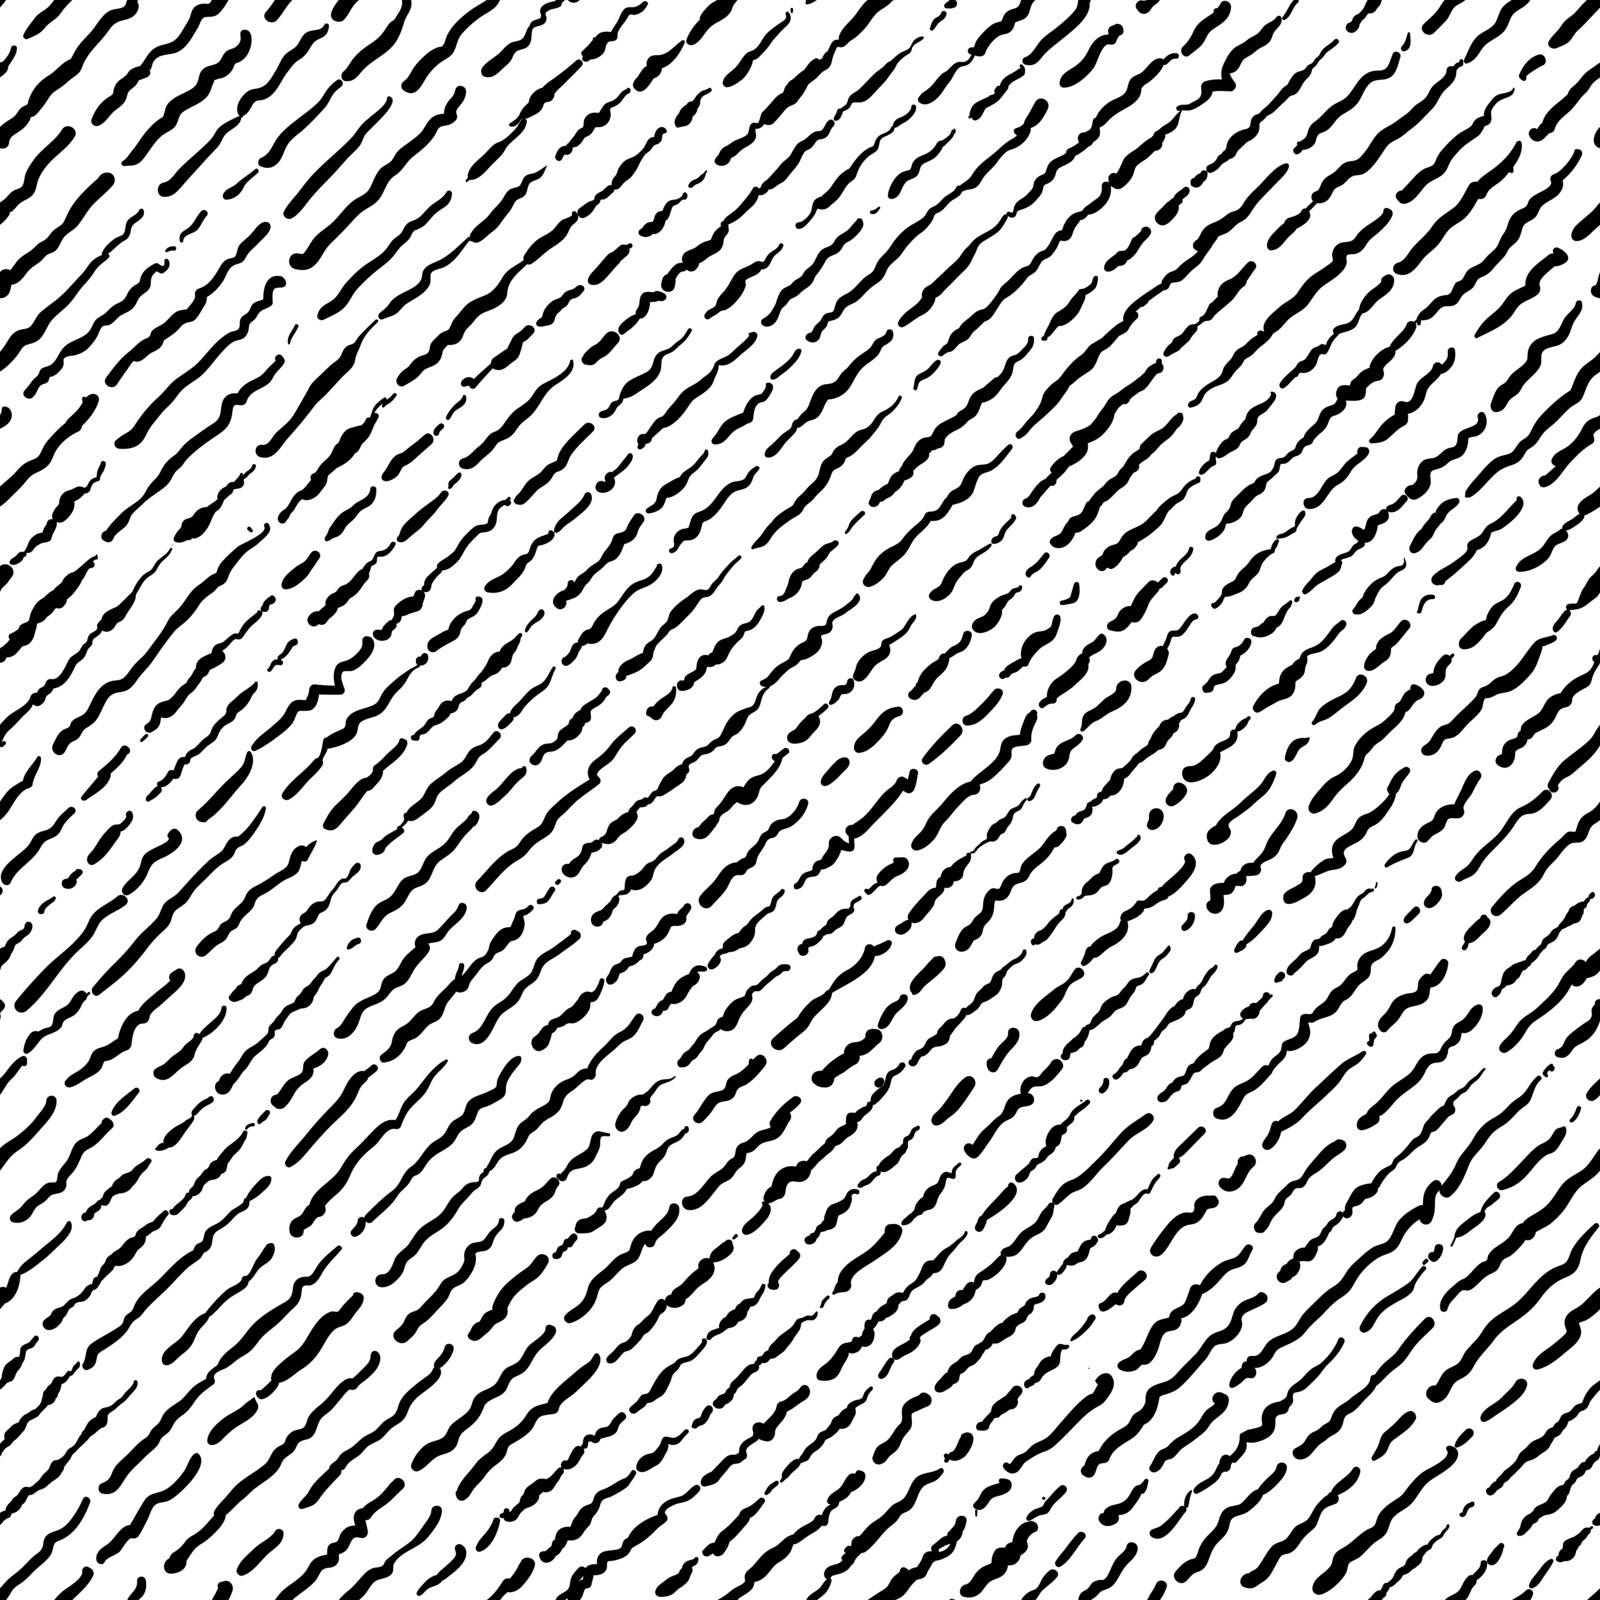 Fingerprint seamless background on square shape. by narinbg